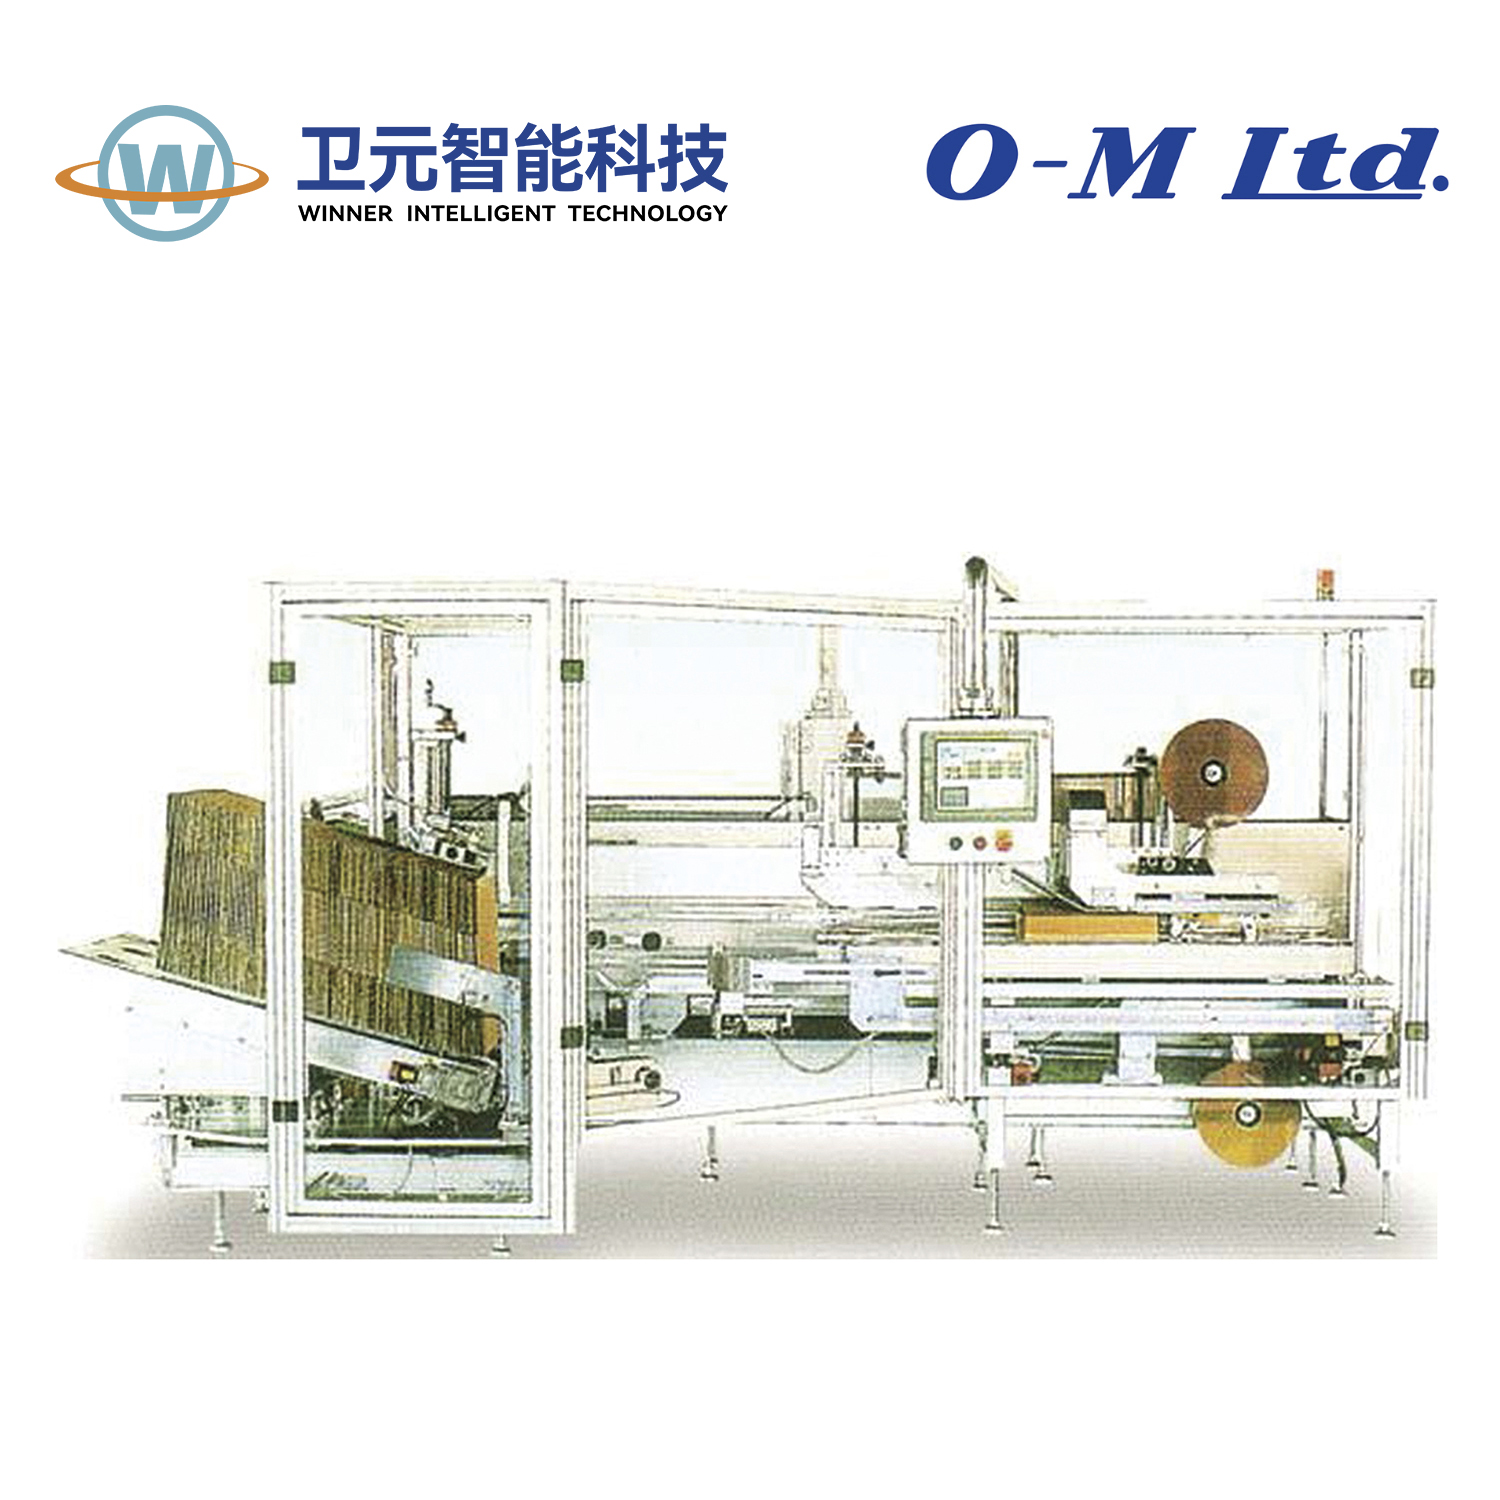 O-MM自动装箱机